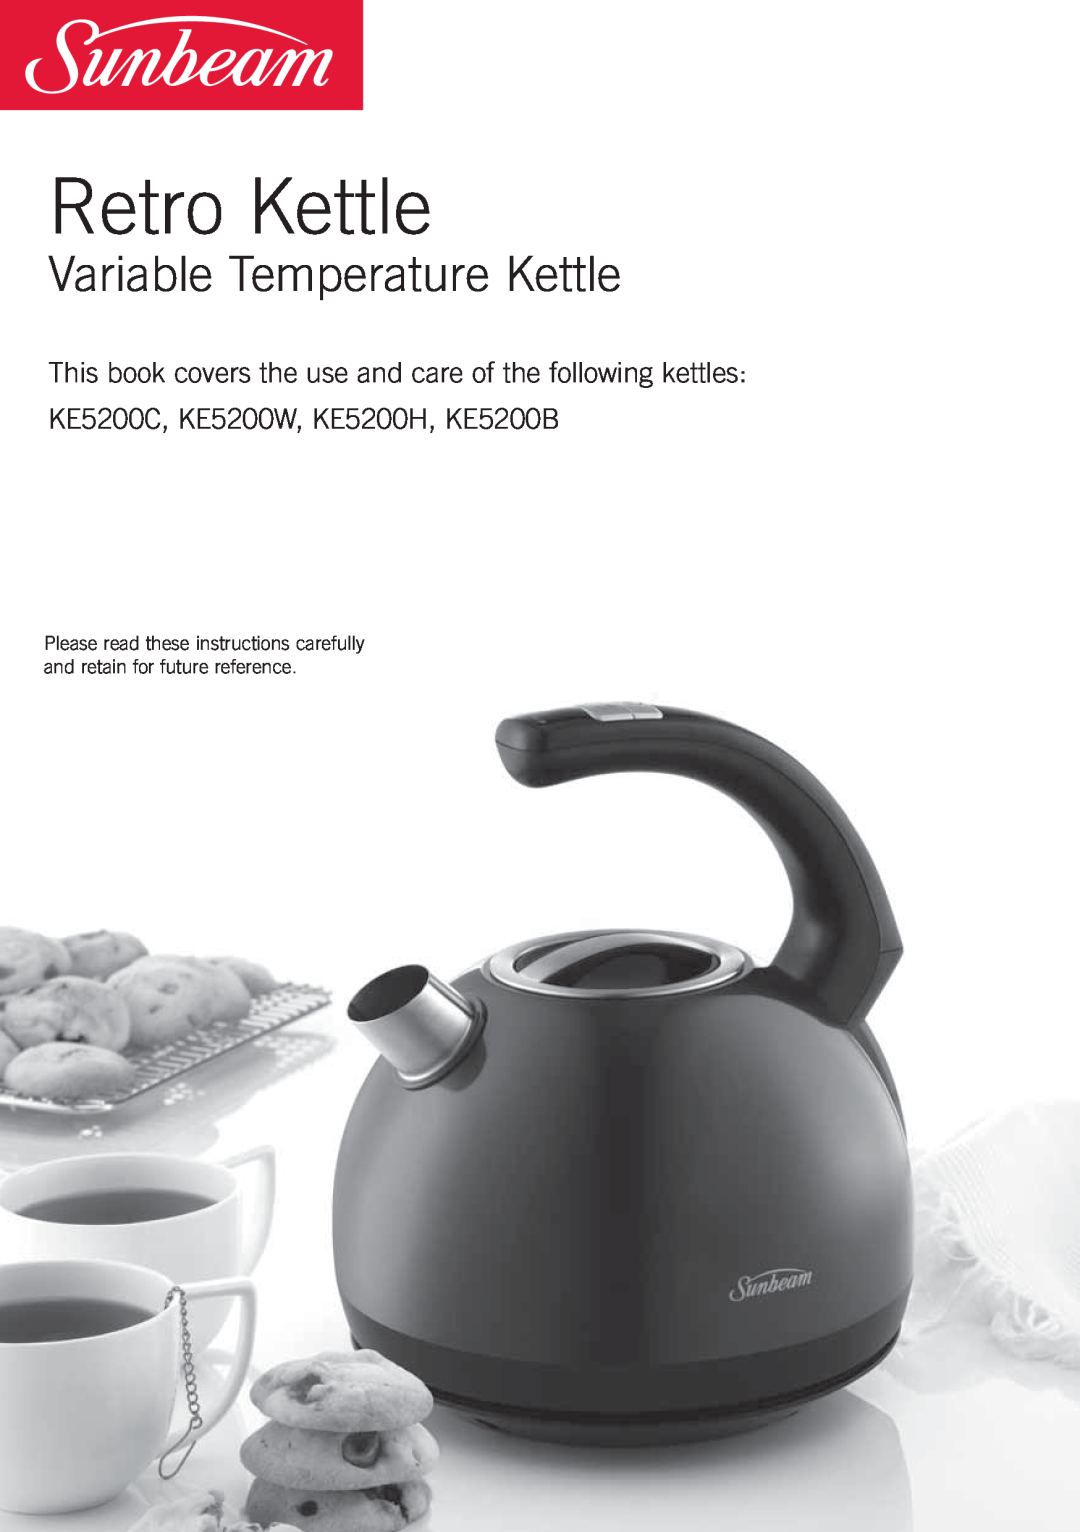 Sunbeam KE5200B, KE5200W, KE5200H, KE5200C manual Retro Kettle, Variable Temperature Kettle 